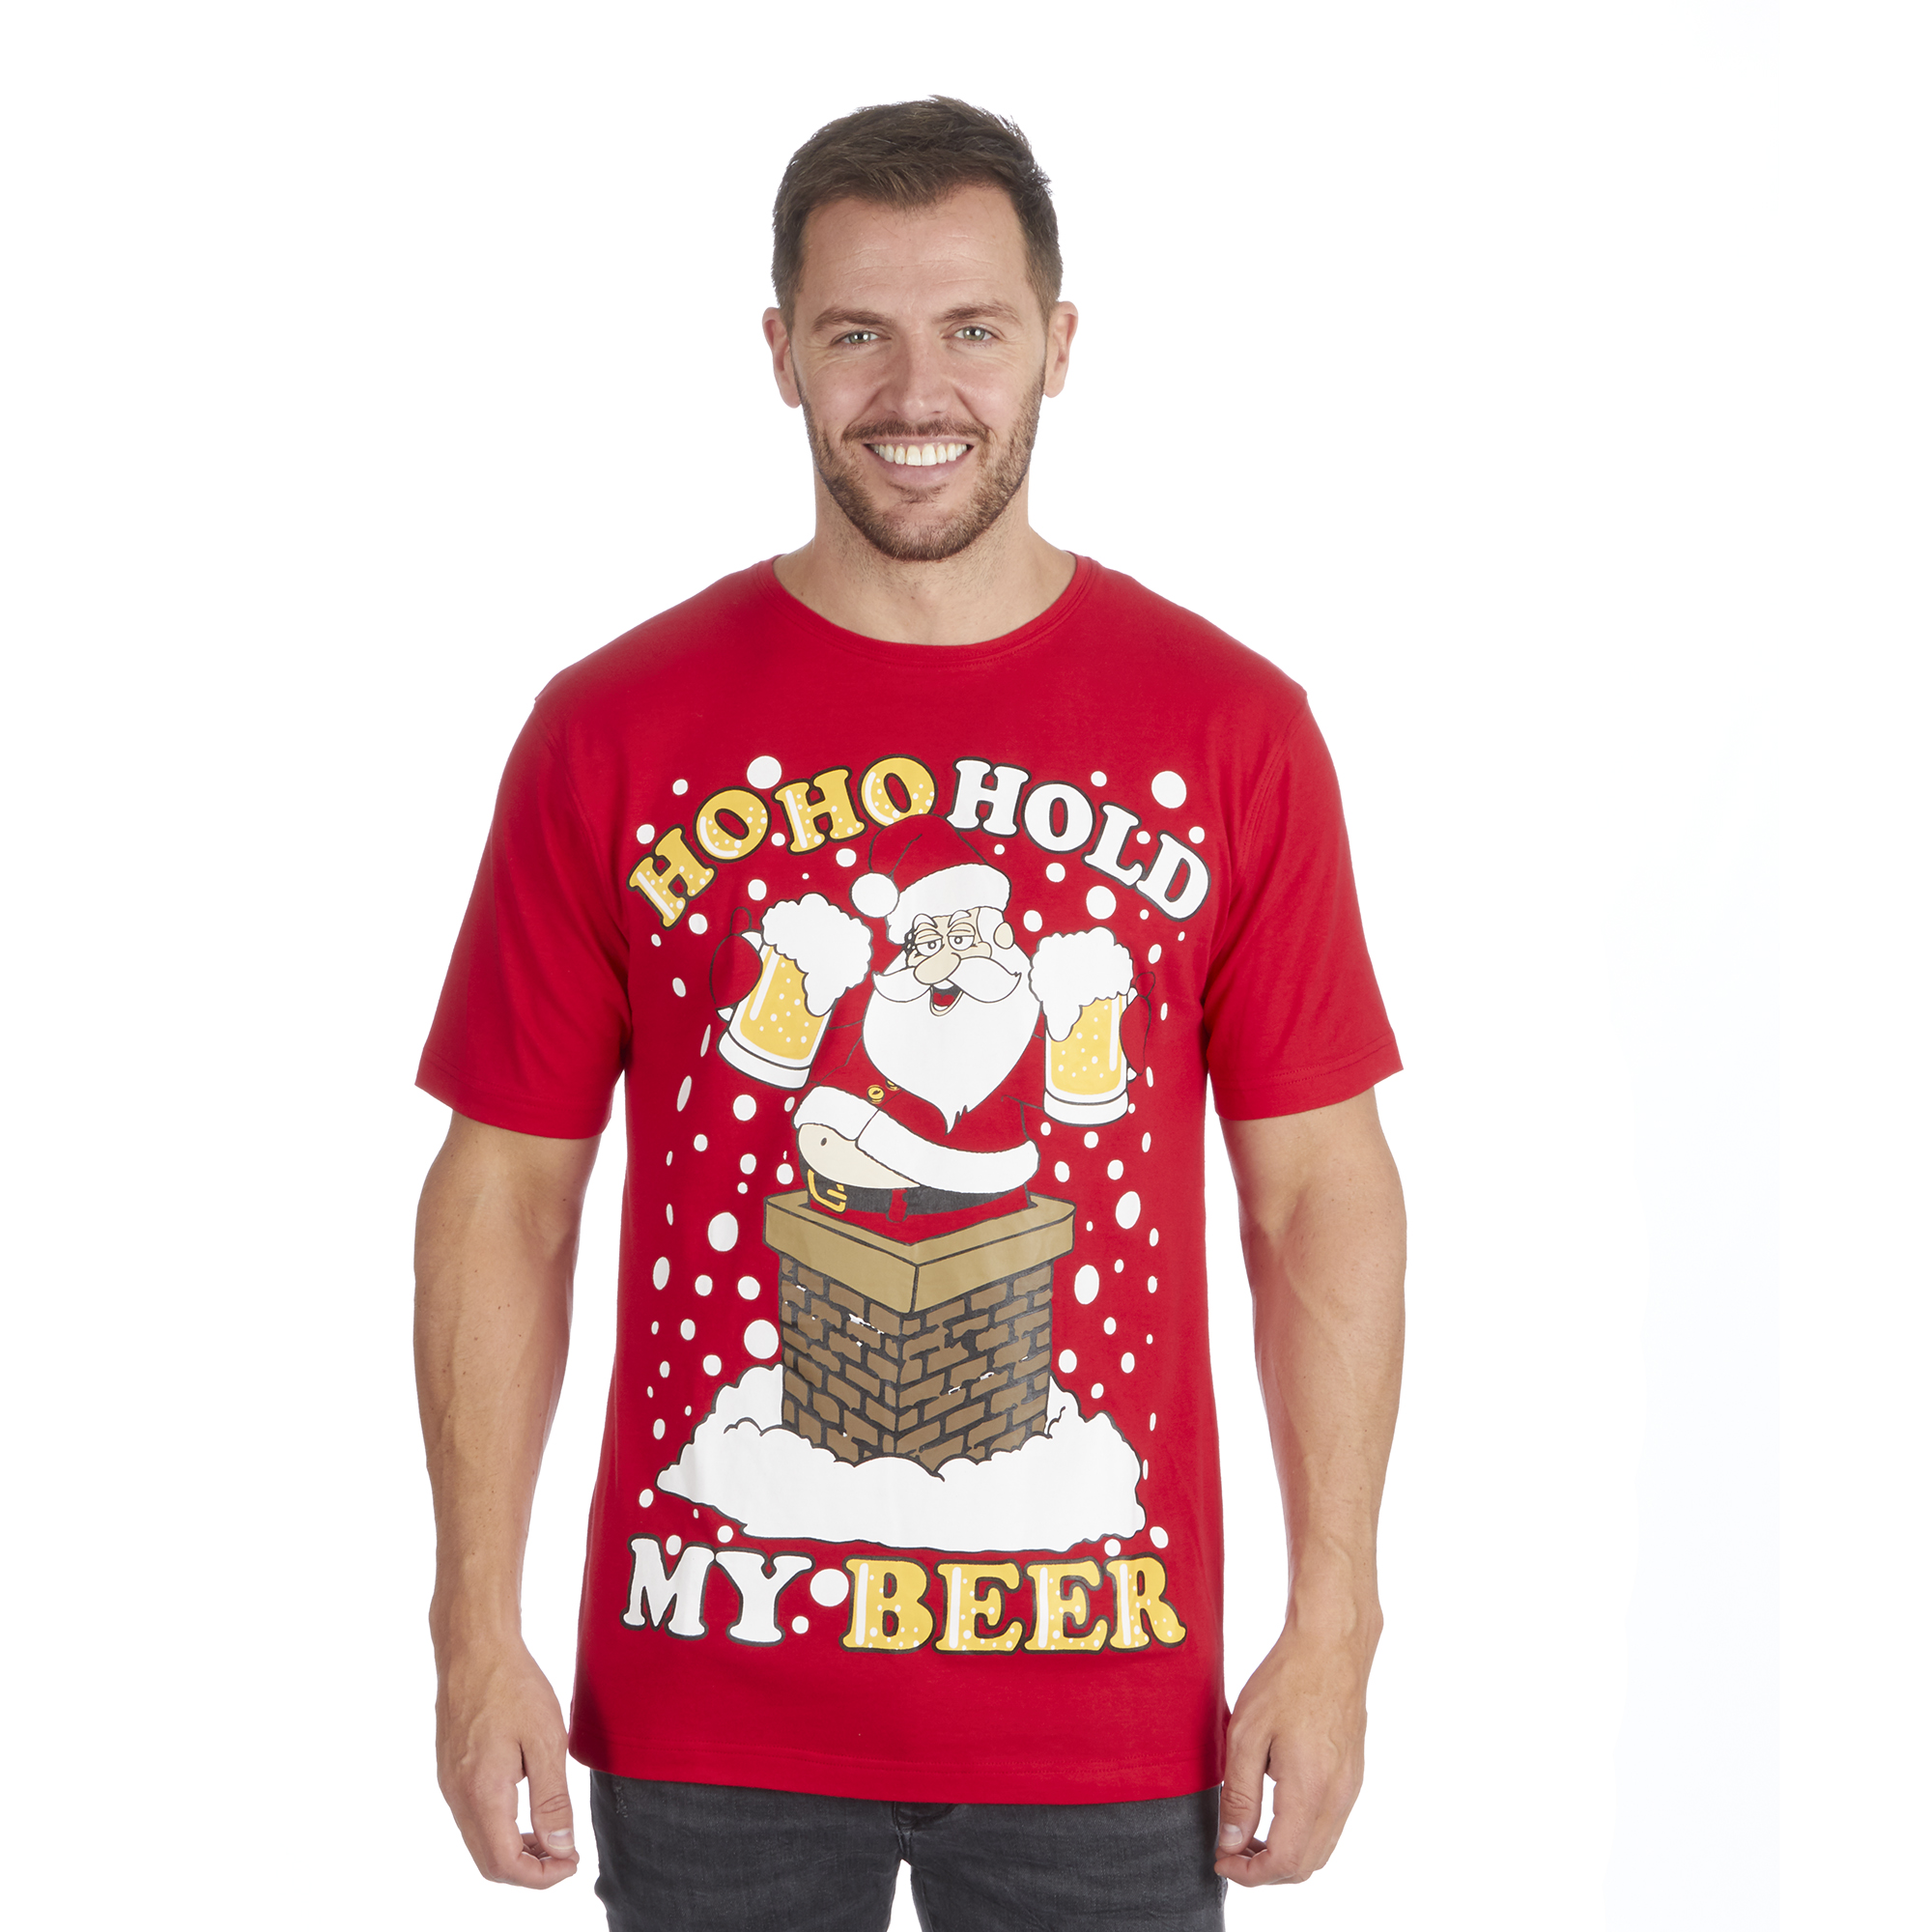 Mens Womens Naughty Cotton Funny Christmas Xmas Top T Shirt Joke Funky Tee S 5xl Ebay